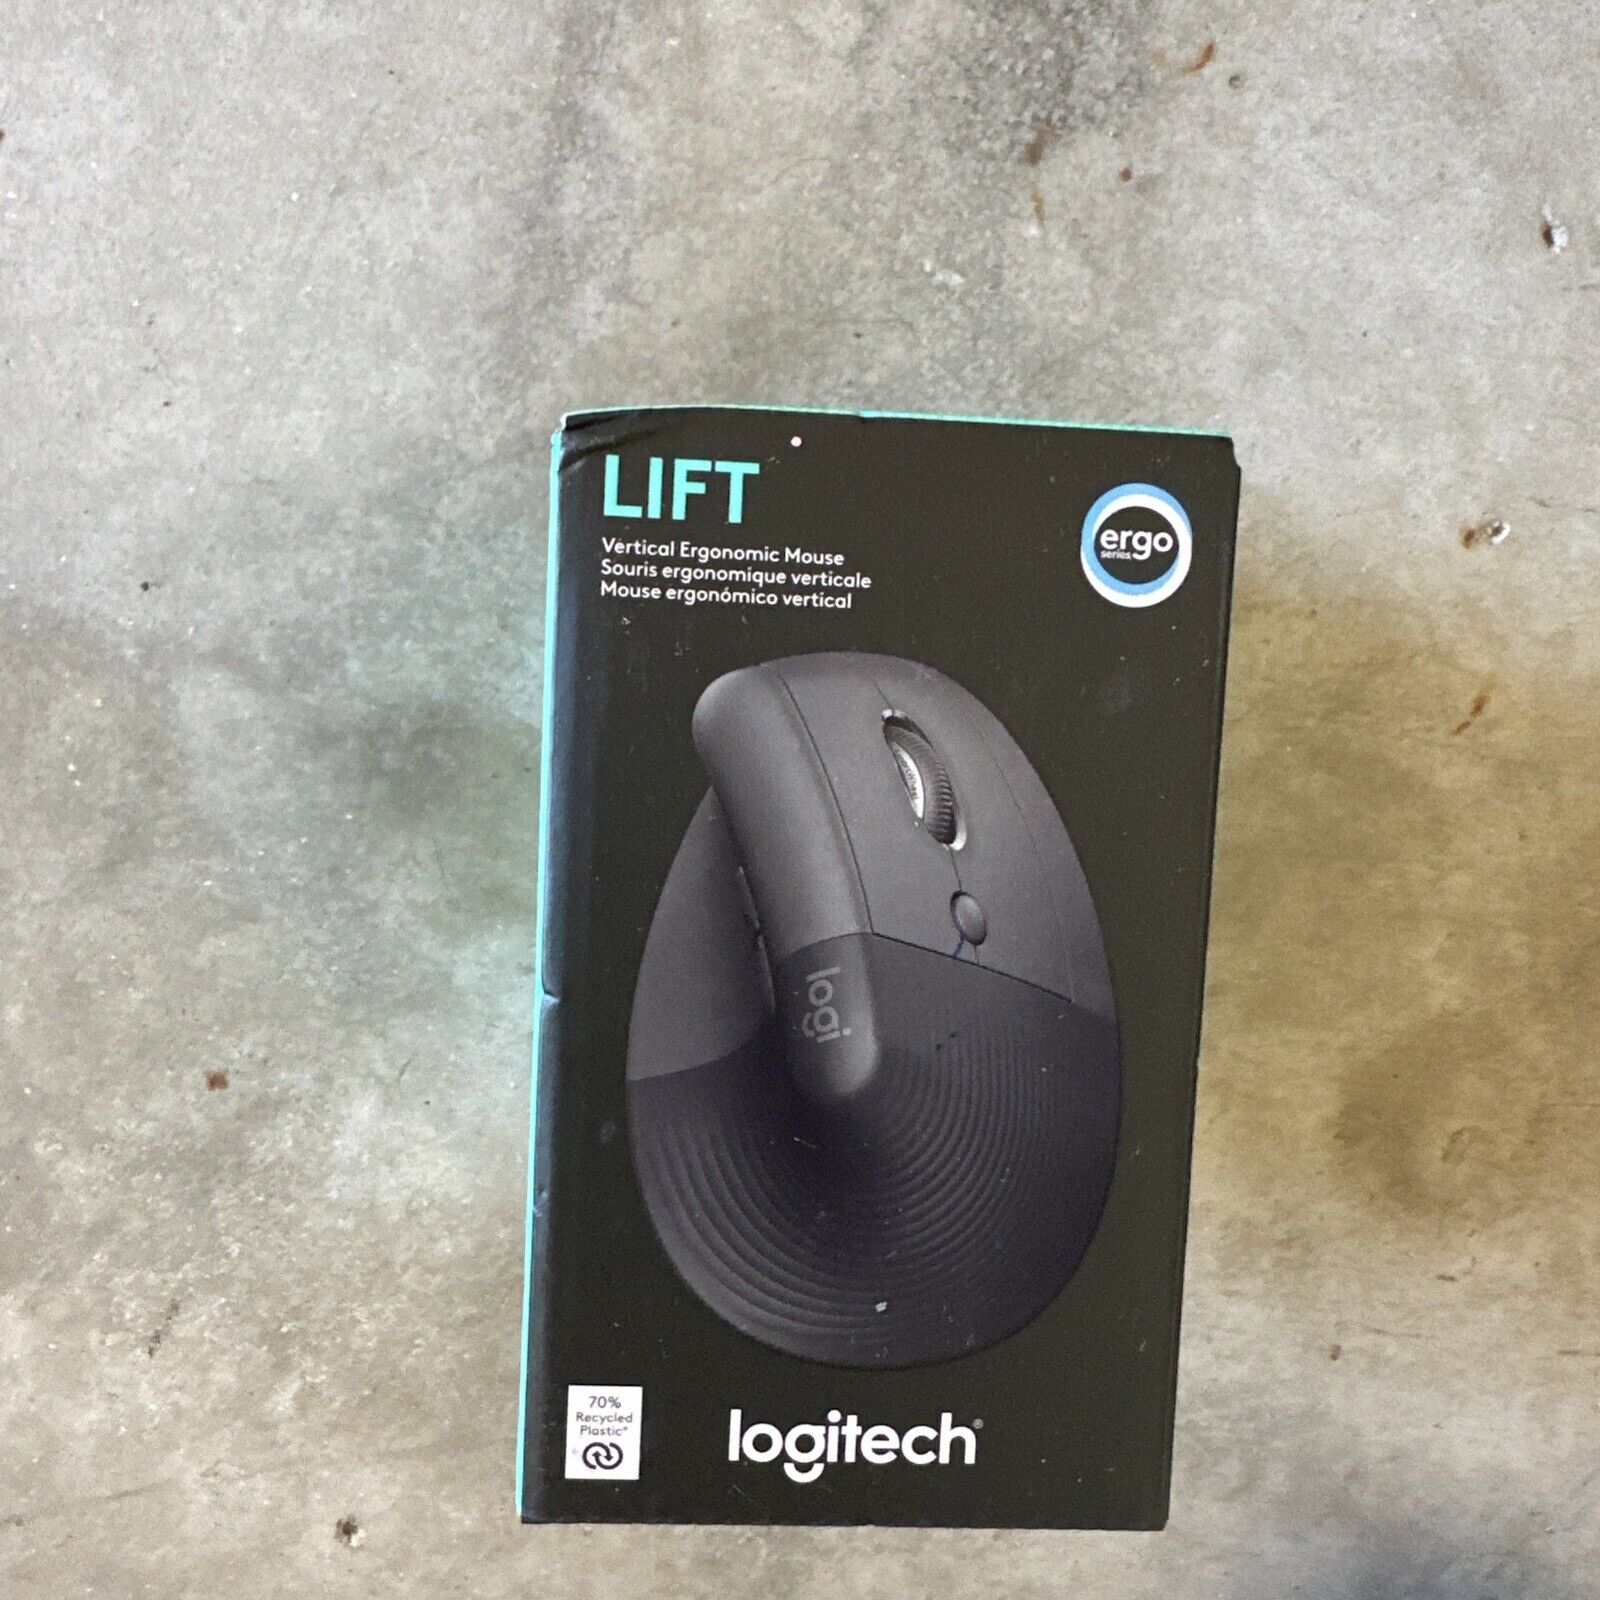 Logitech Lift Vertical Ergonomic Mouse Wireless Bluetooth - Black (910-006466)